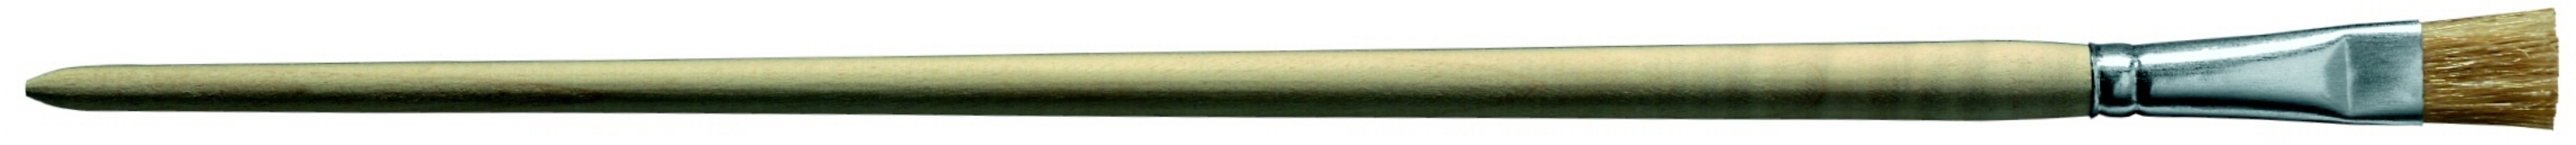 Gussow penseel lange steel, no.4